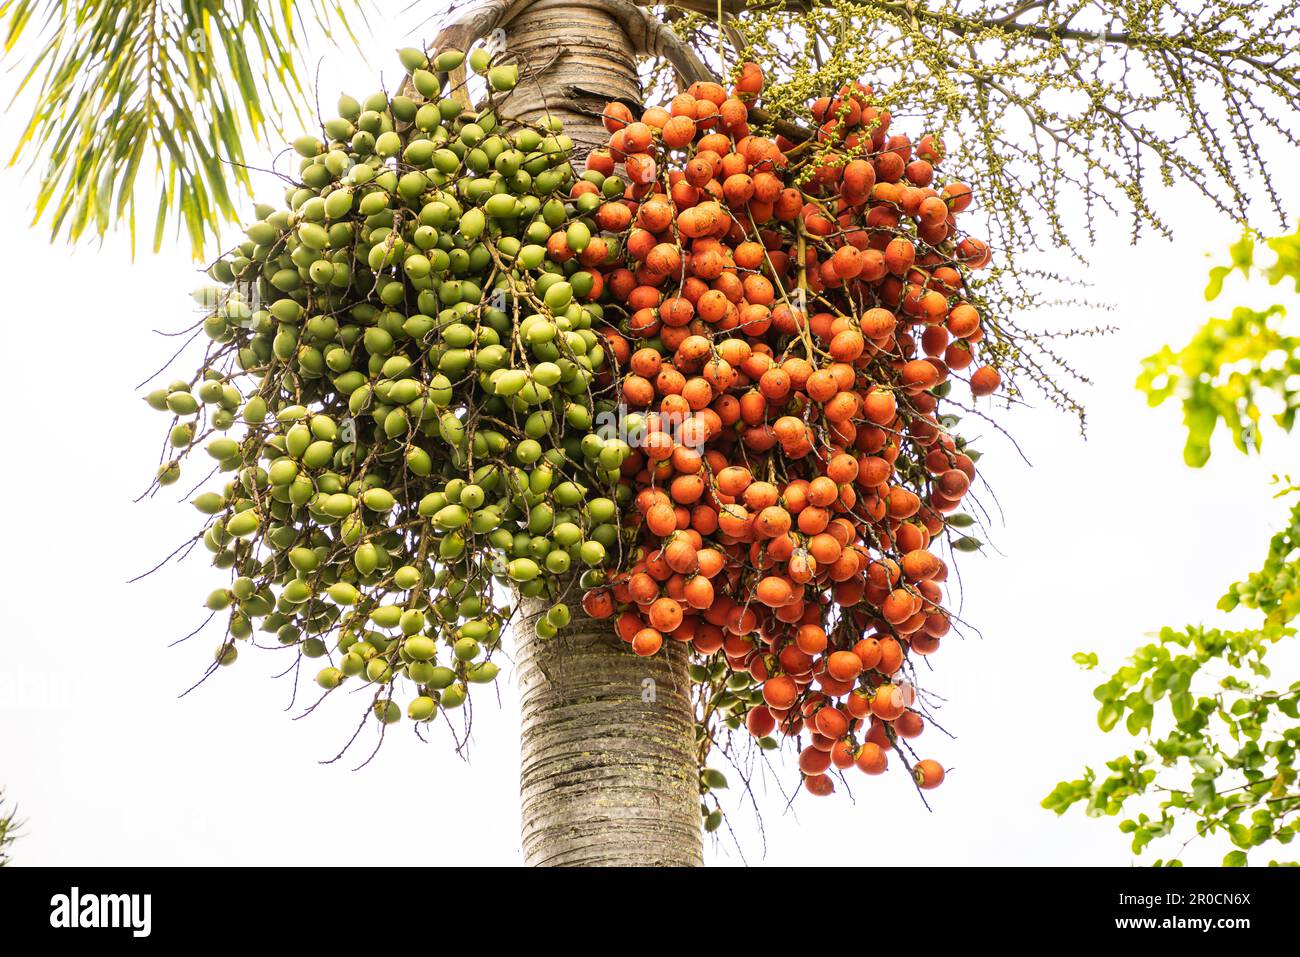 Fairchild Tropical Botanic Garden, Miami, Florida - Borassus aethiopum, a socio-economic important agroforestry palm in Africa. Stock Photo